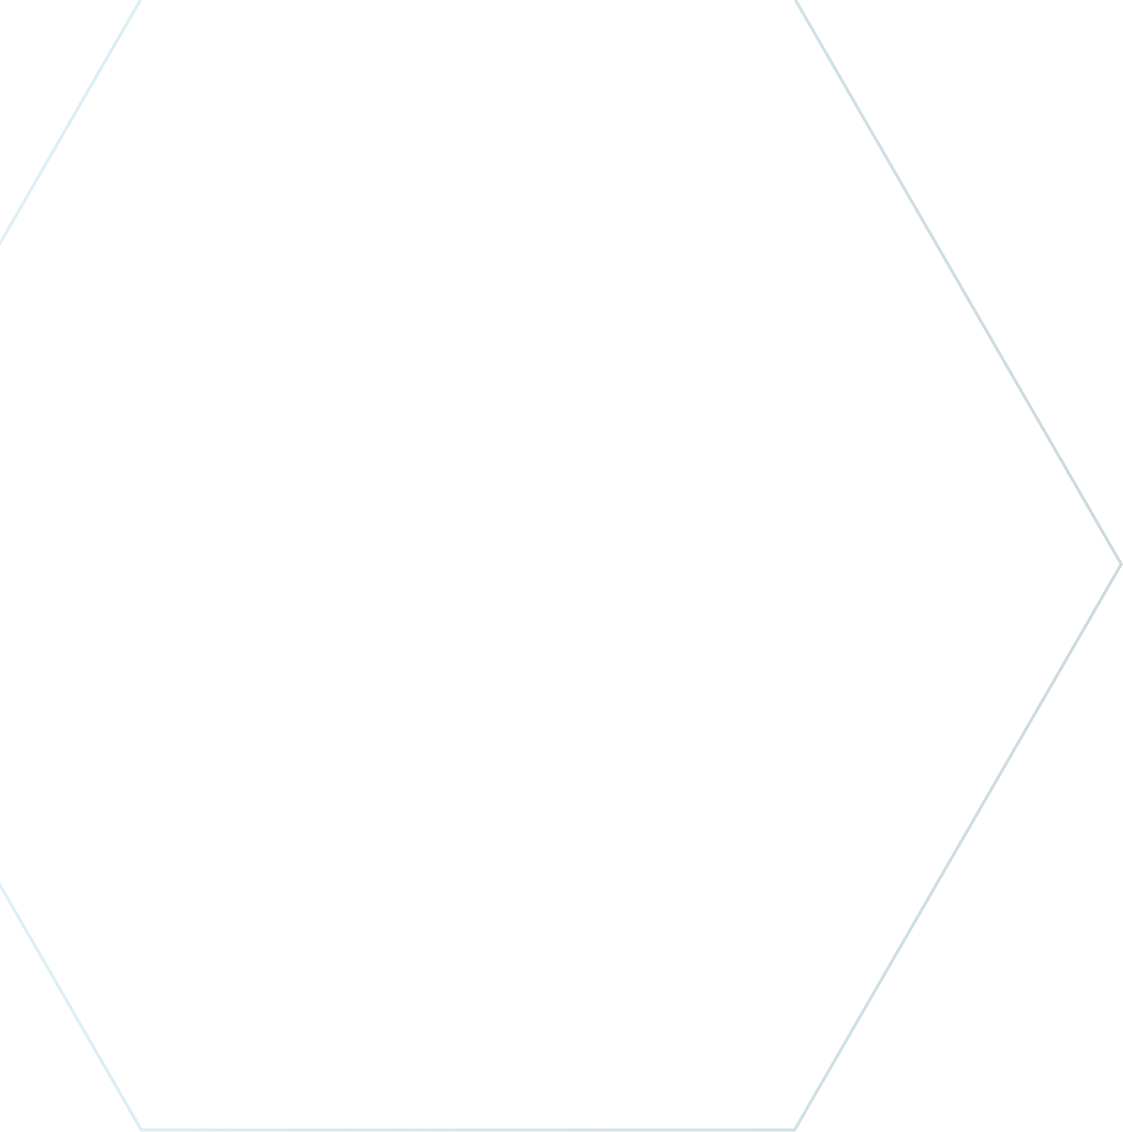 hexagon pattern